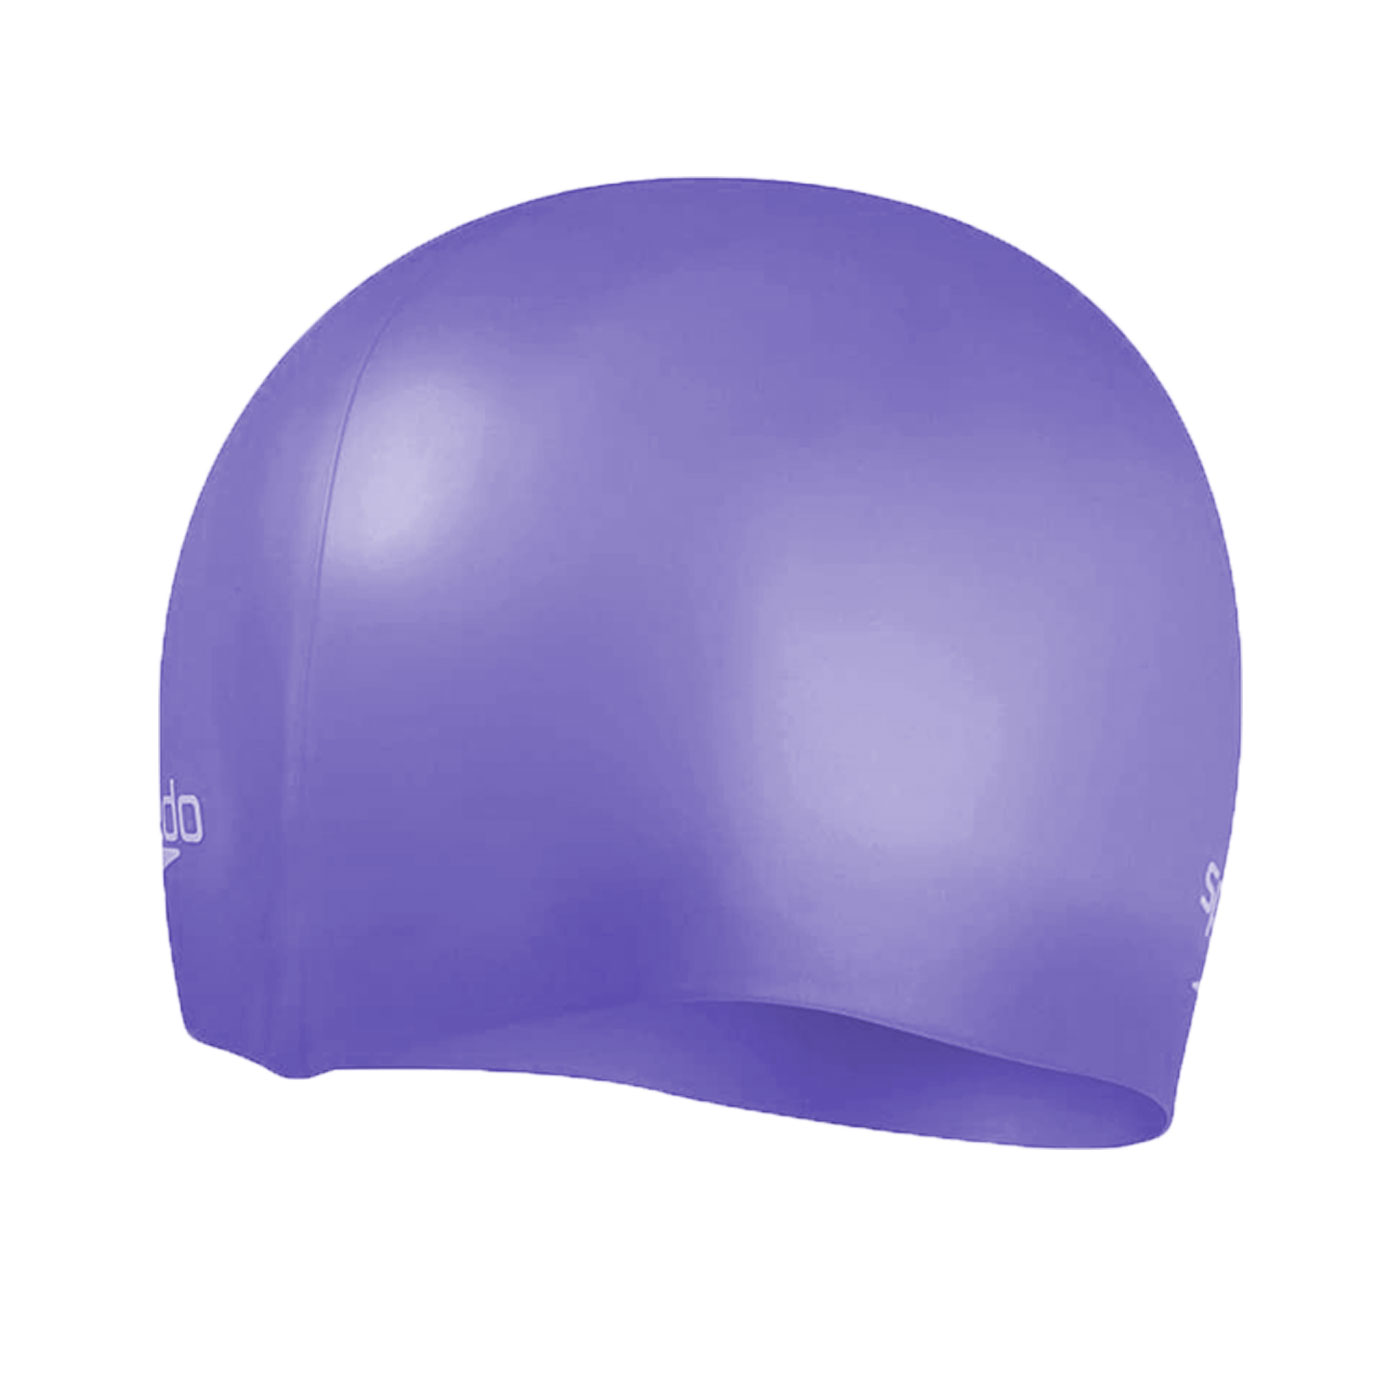 SPEEDO 成人矽膠泳帽 Plain Moulded  SD87098415333 - 紫白